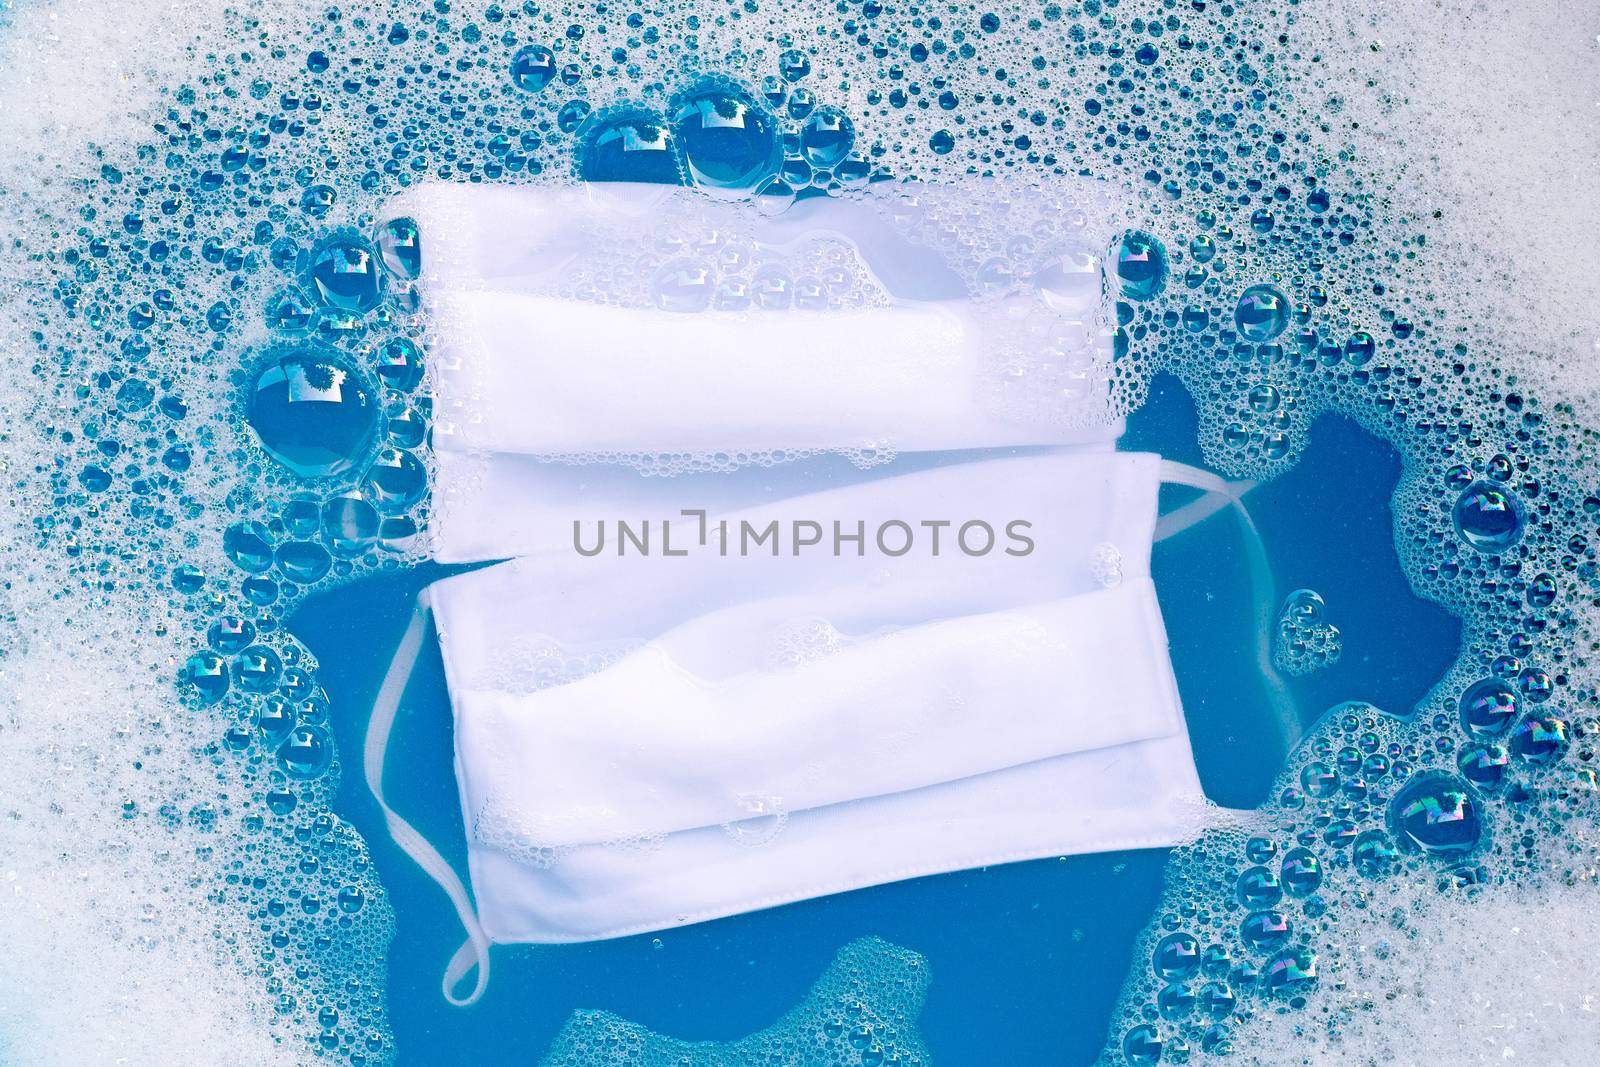 Cloth masks soak in powder detergent water dissolution before washing. Hygiene coronavirus (Covid-19) protection concept